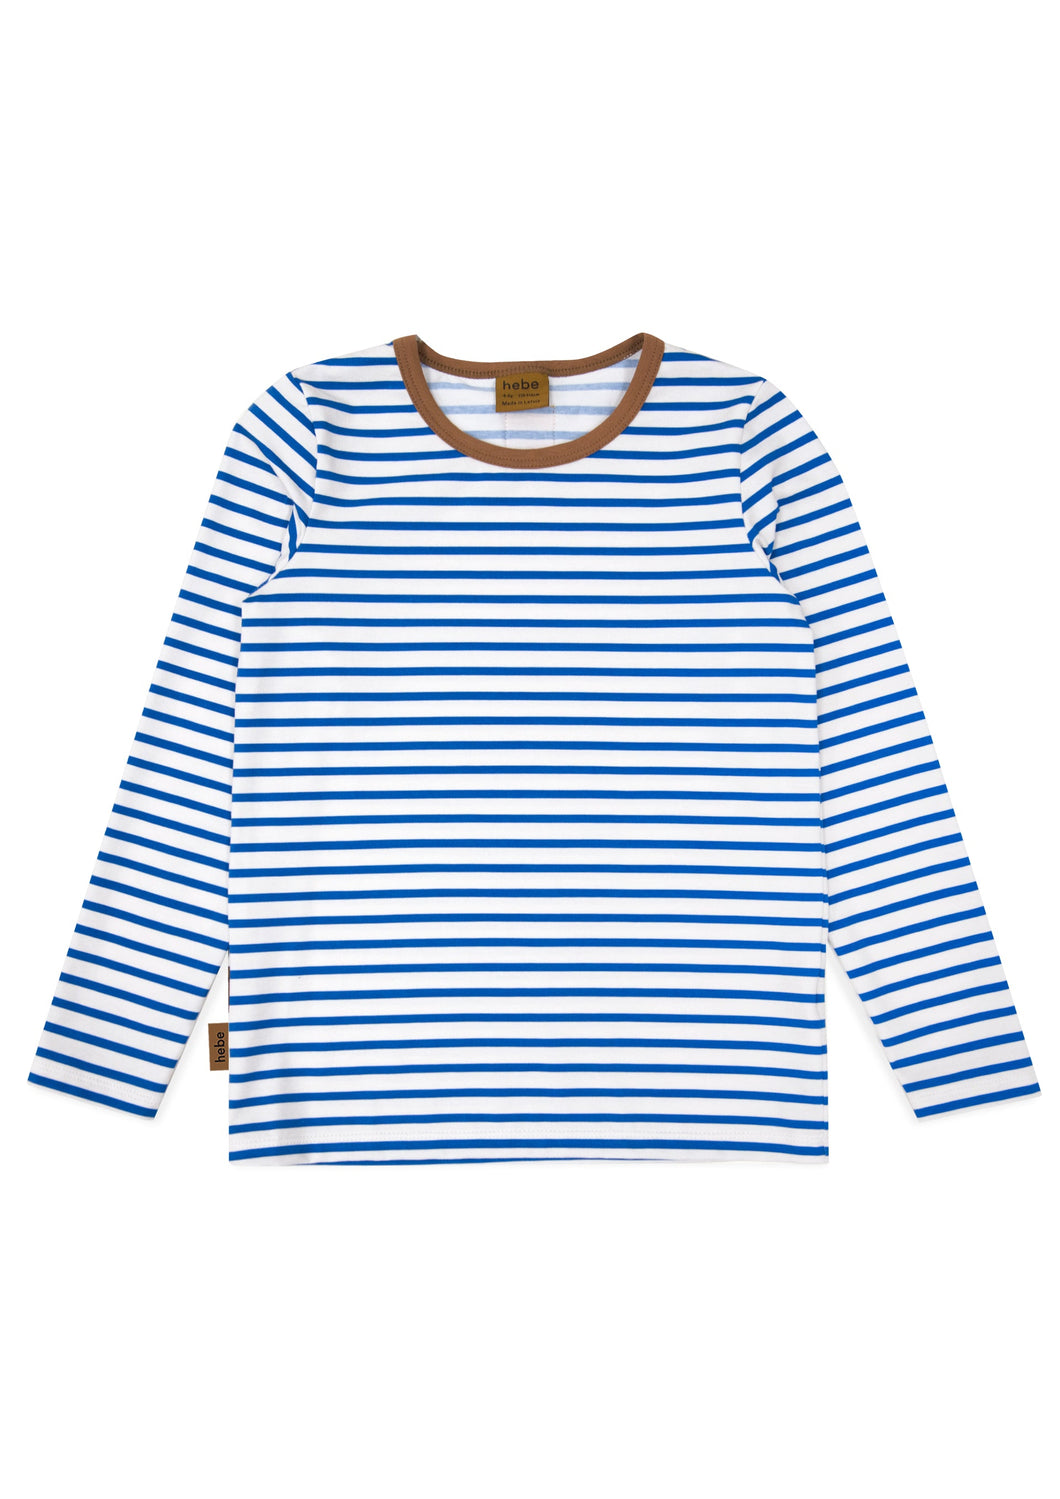 Hebe  striped t-shirt (SZ 6m-12y)